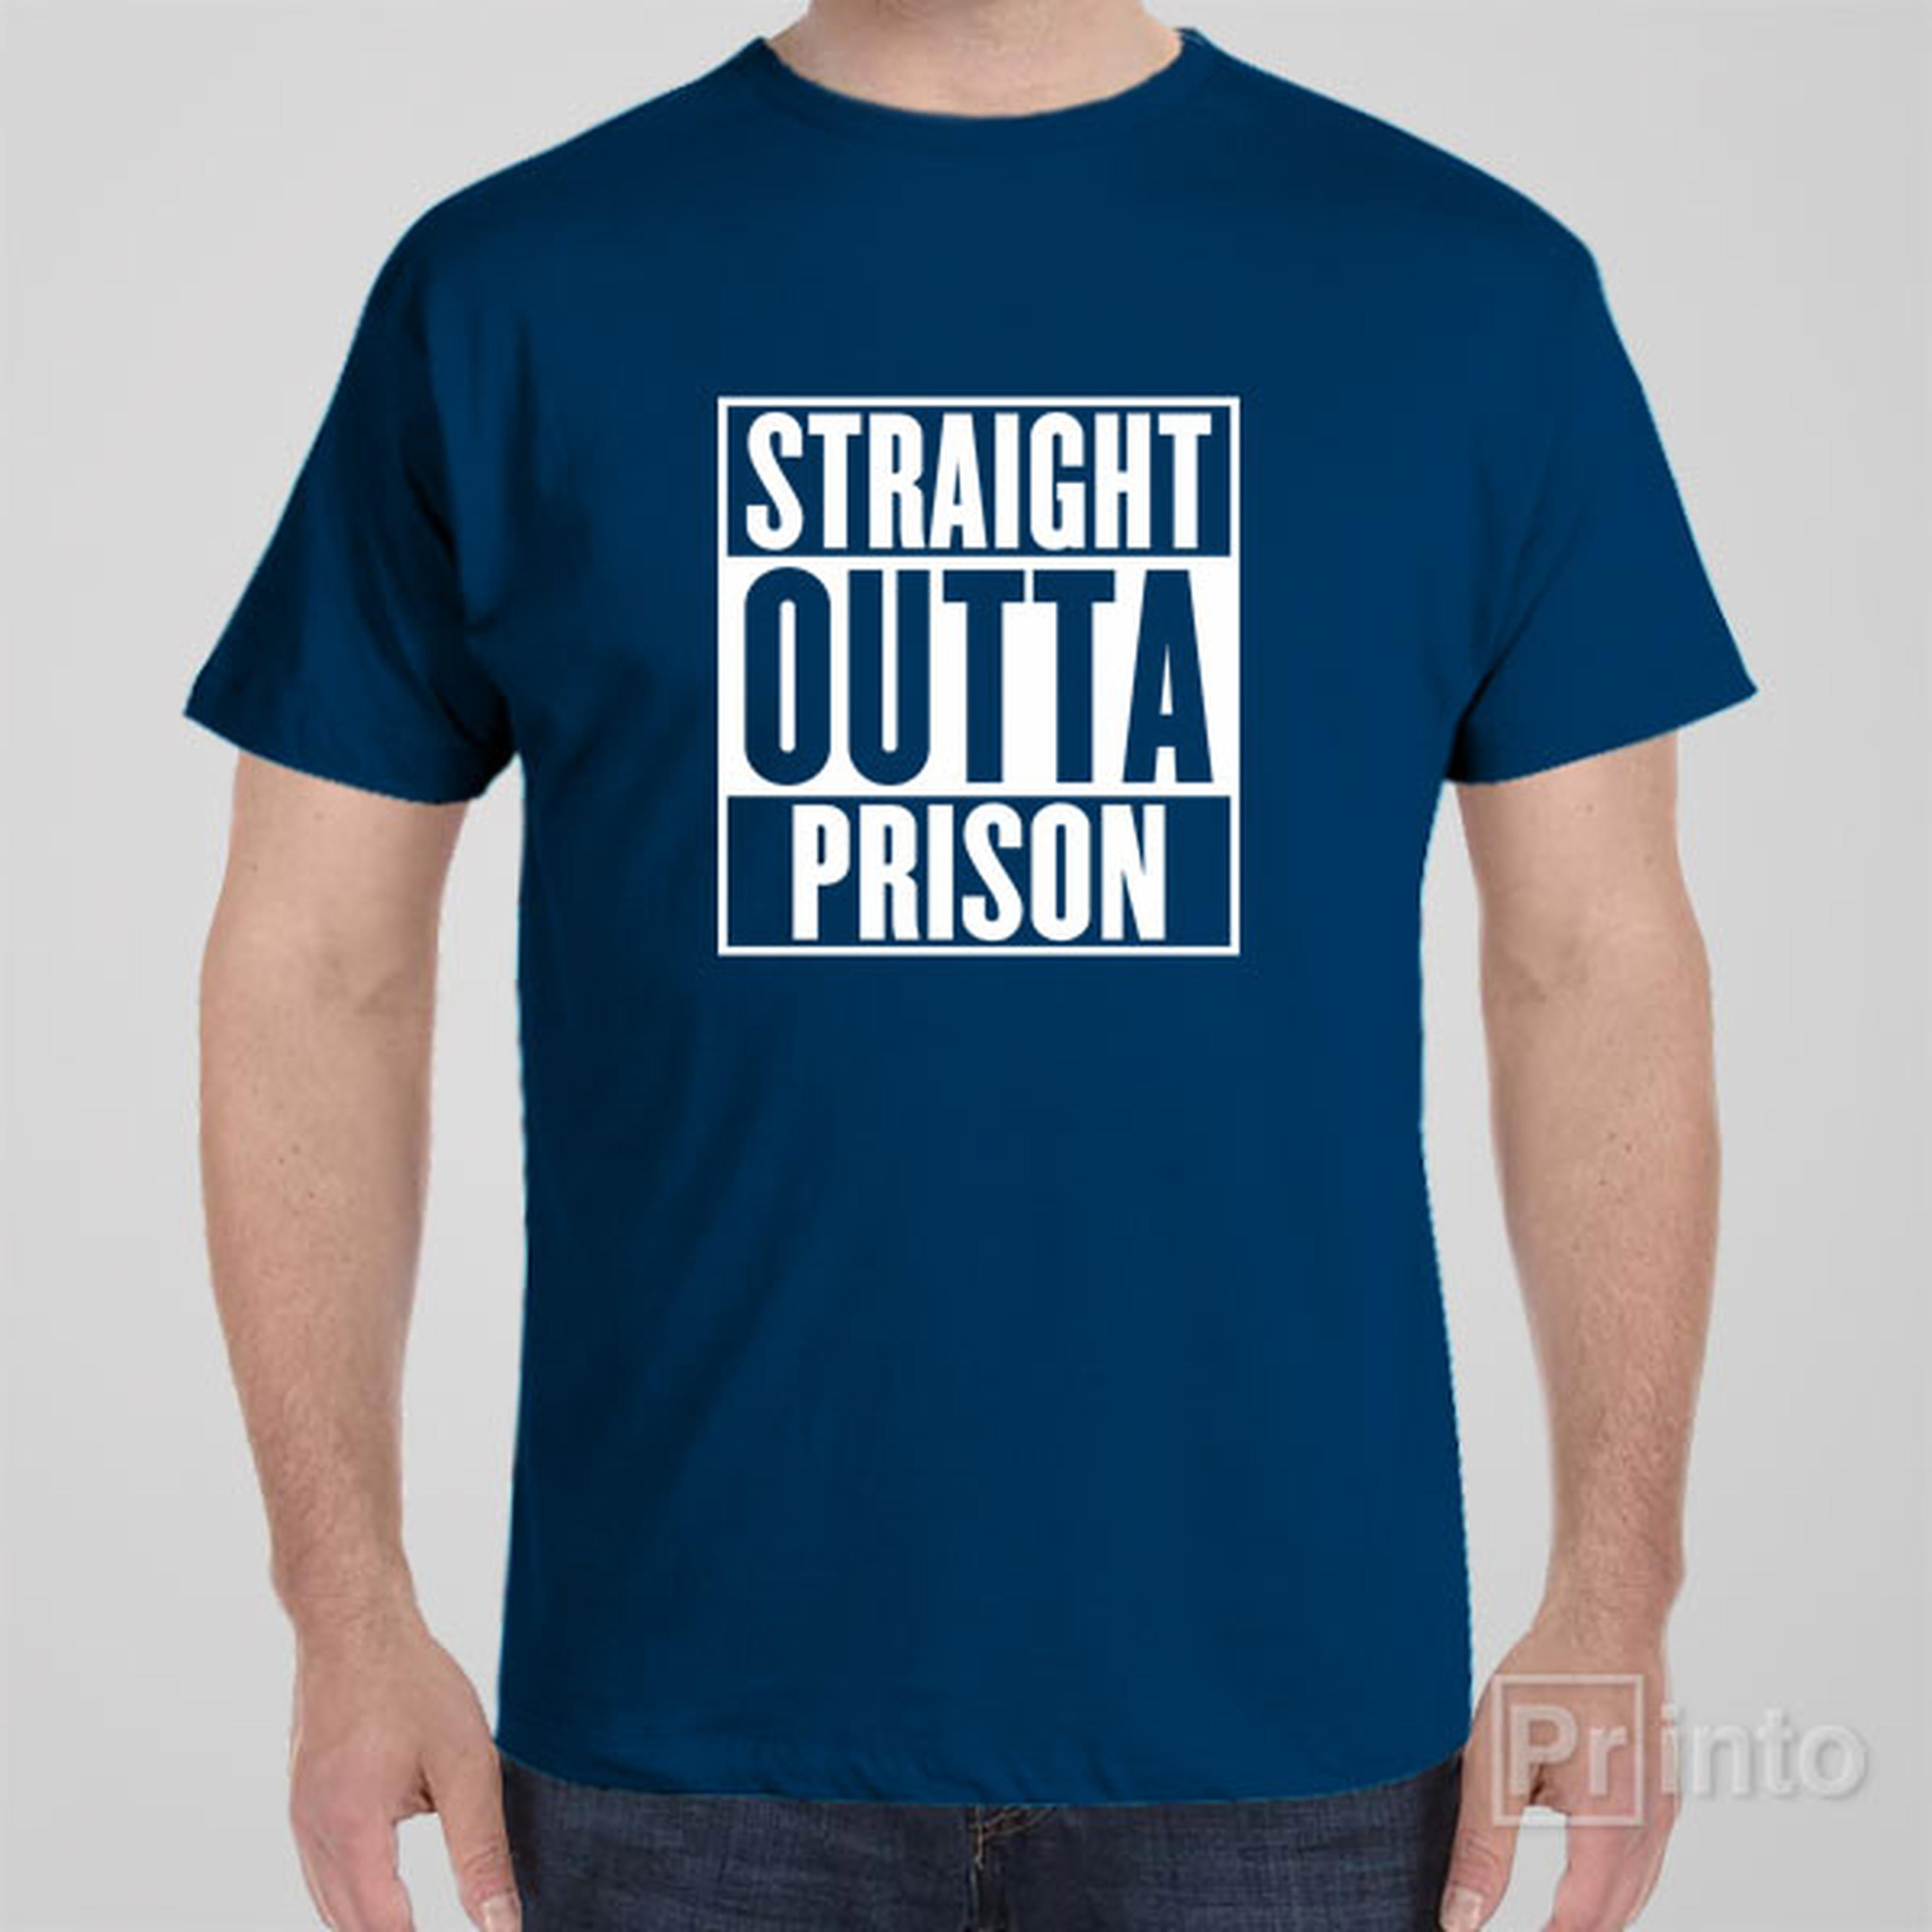 straight-outta-prison-t-shirt